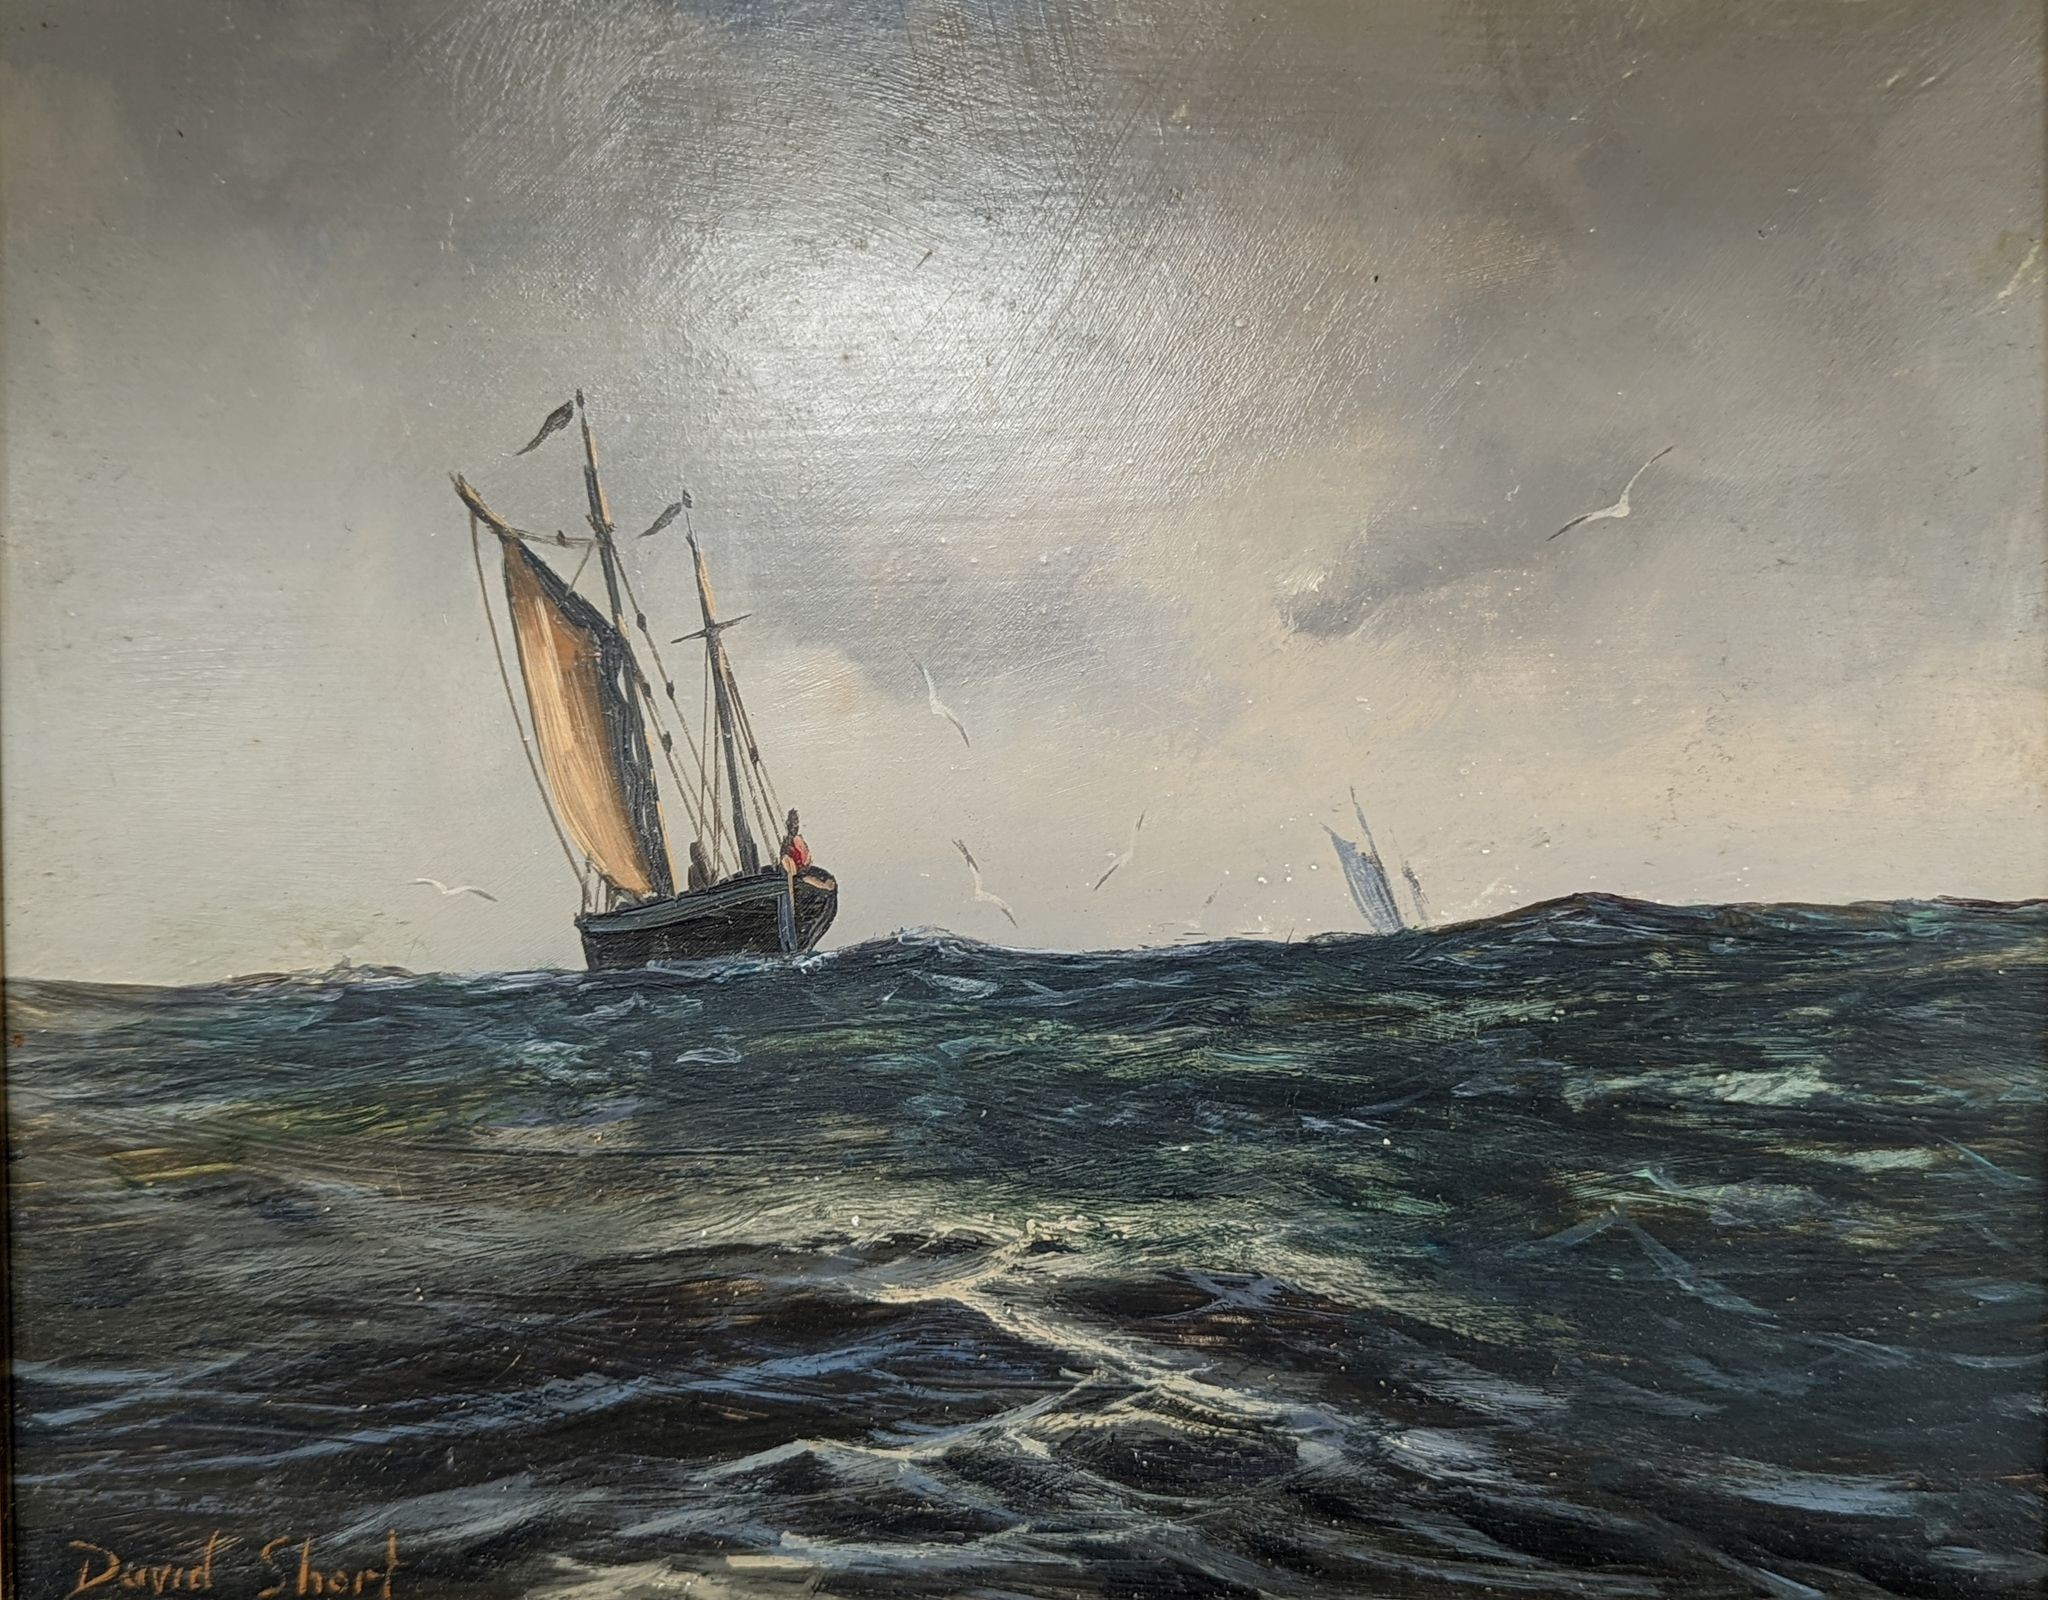 David Short, oil on board, Fishing boat at sea, 19 x 24cm